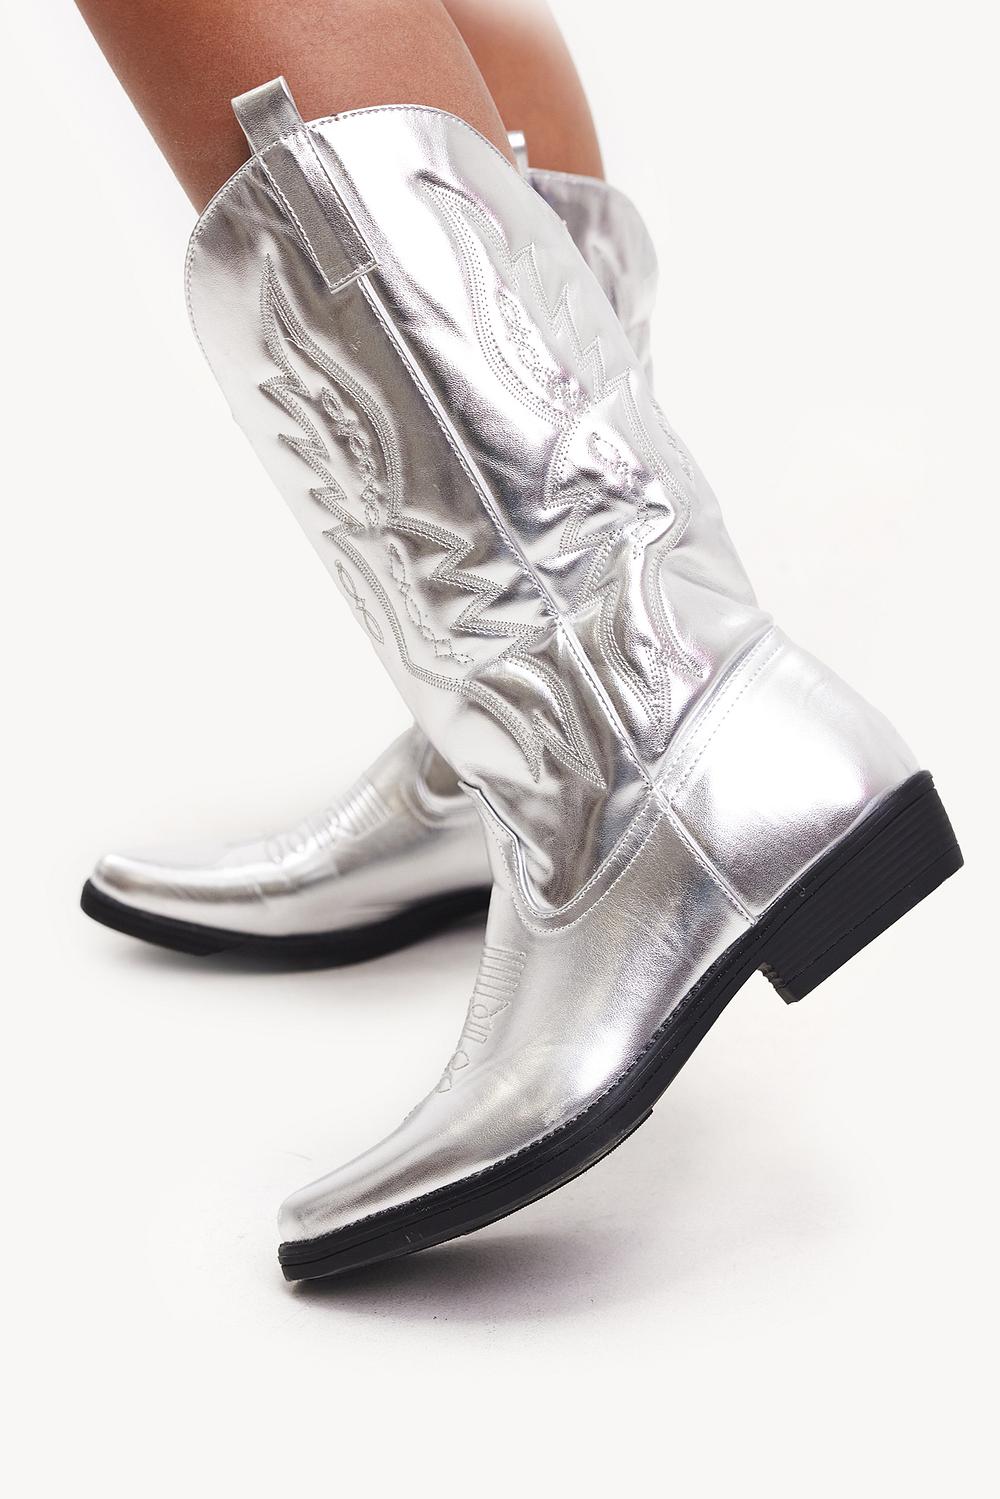 Silver cowboy boots